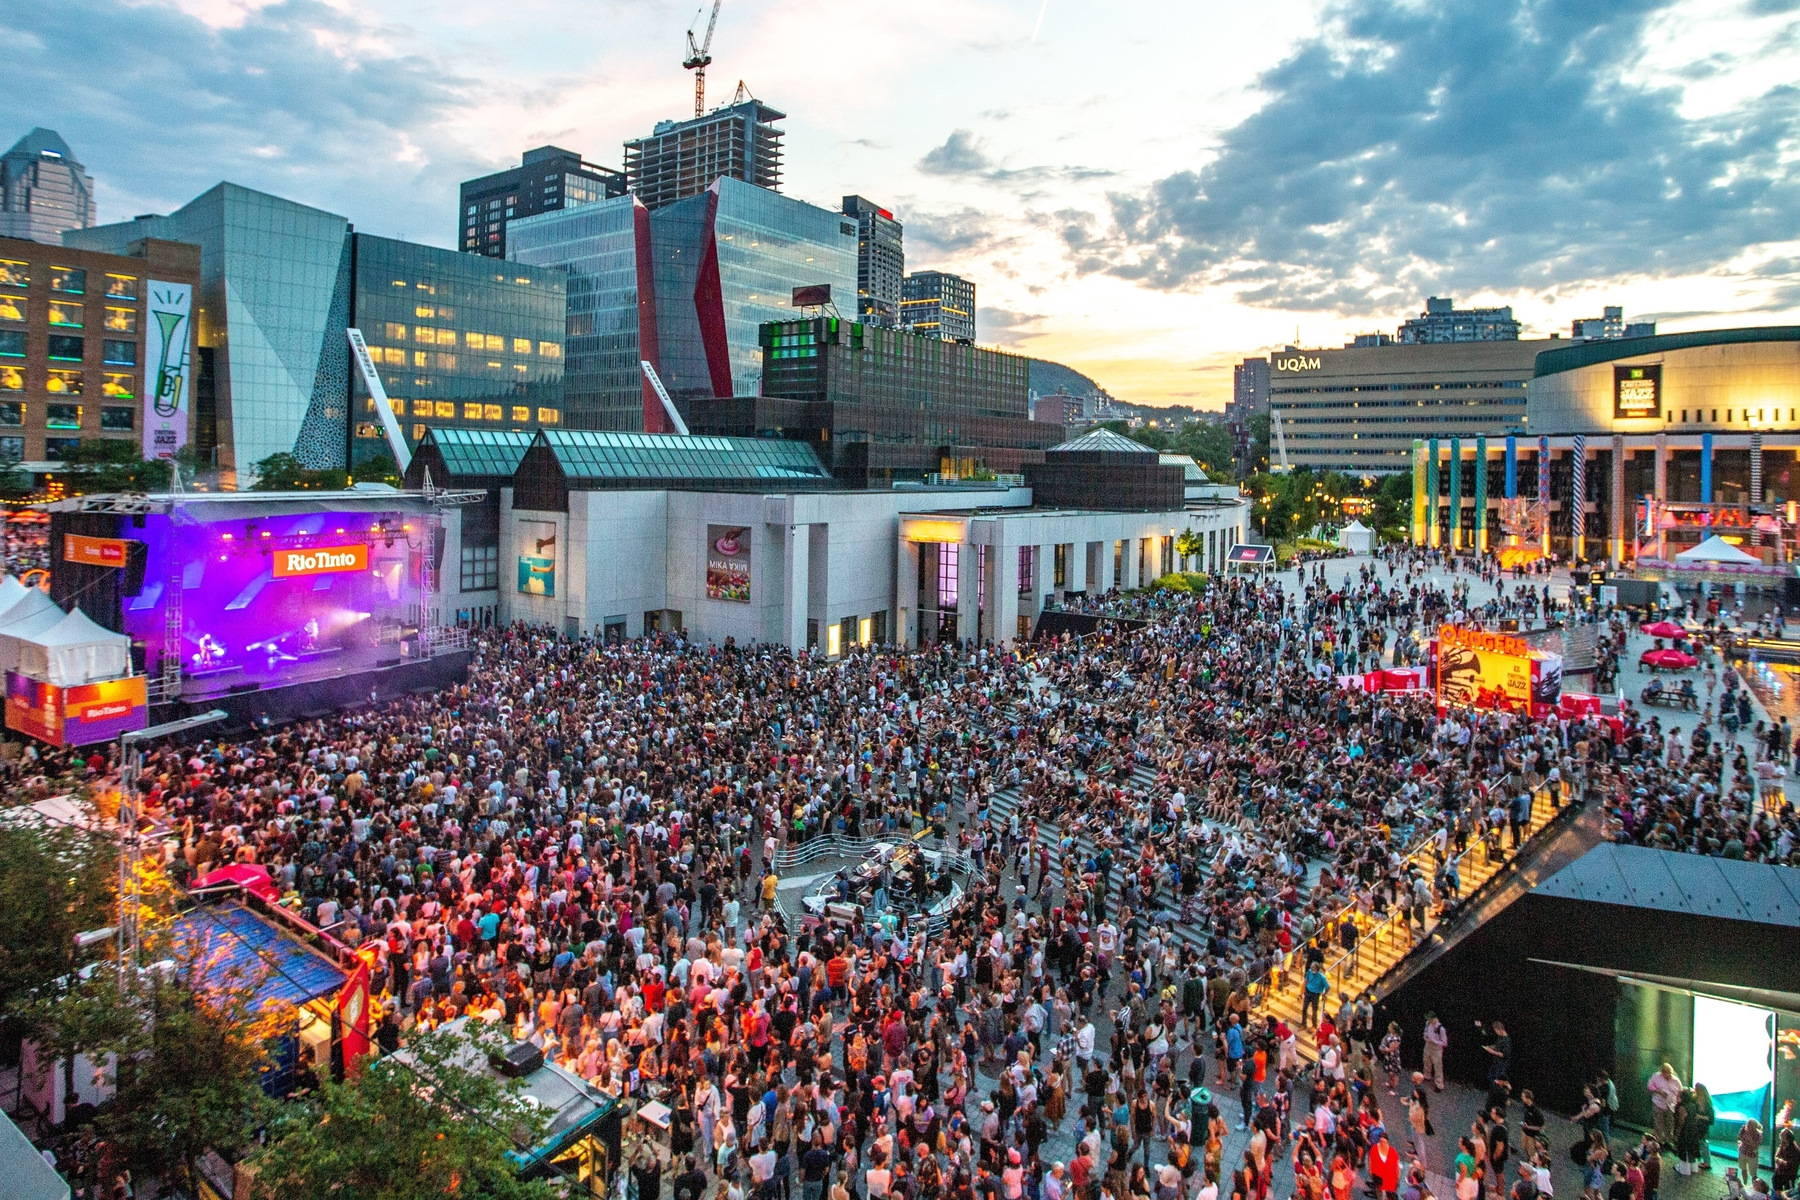 Montréal festivals and events for everyone